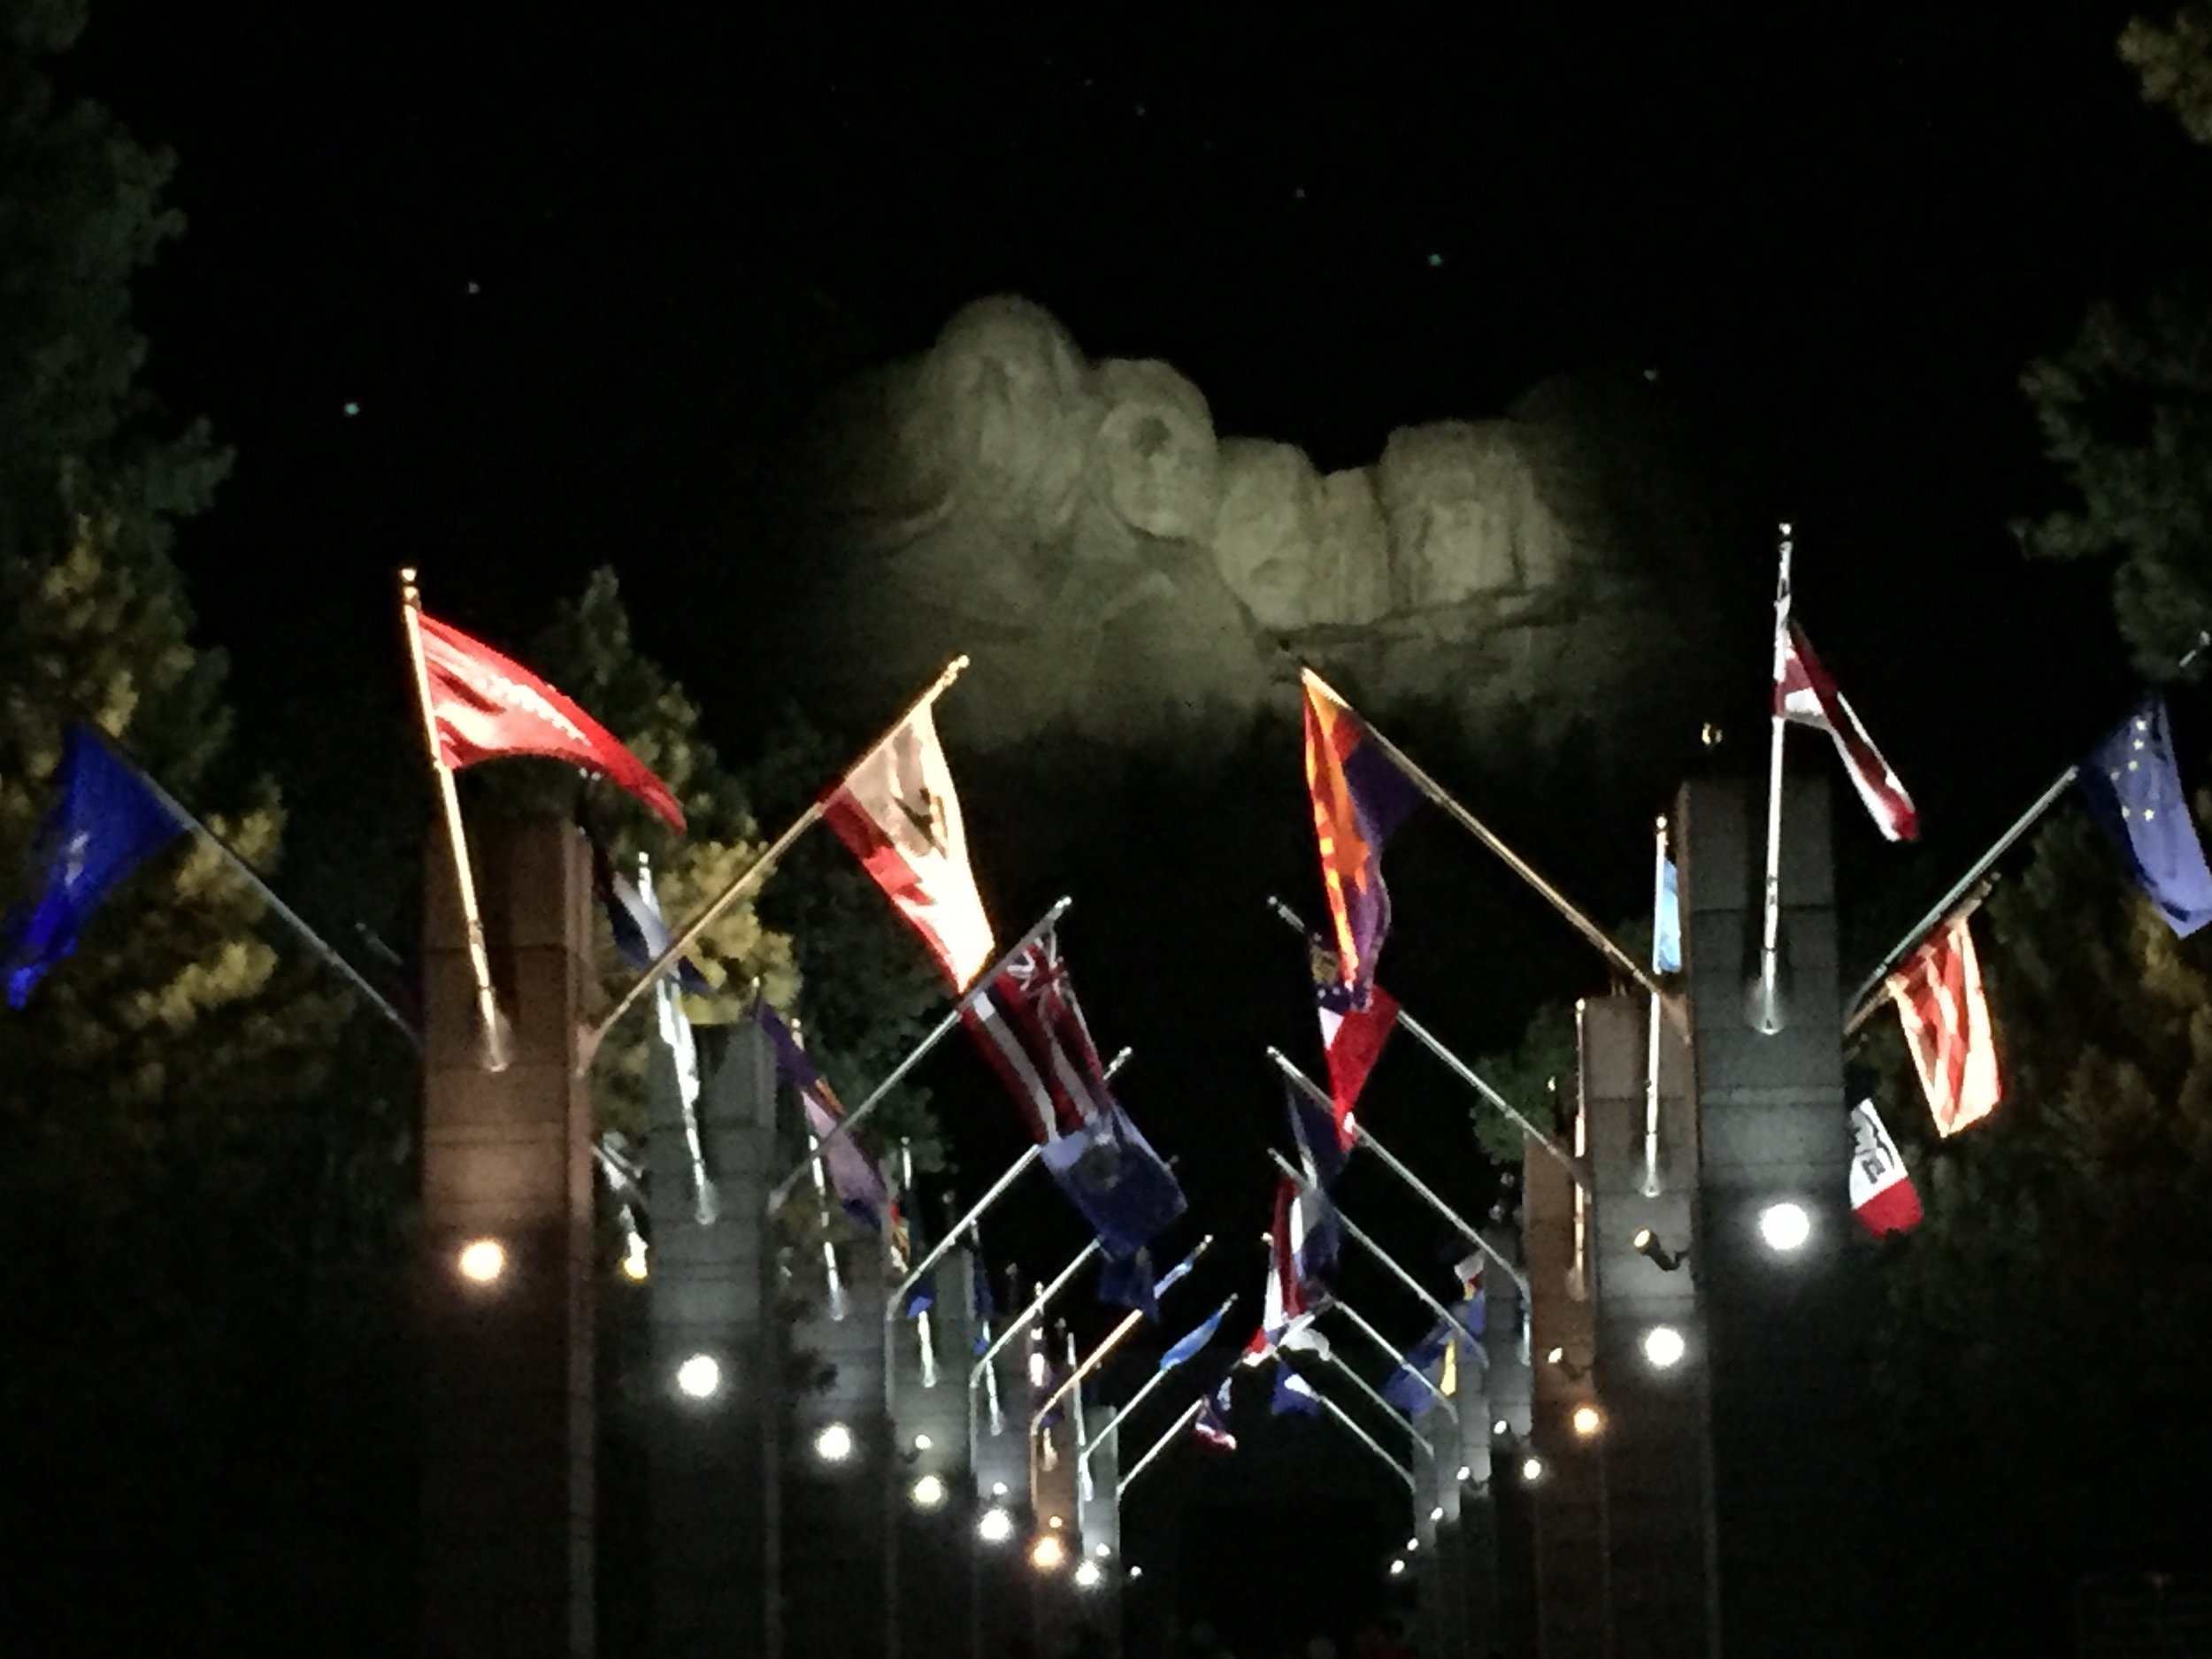 Mt. Rushmore at night